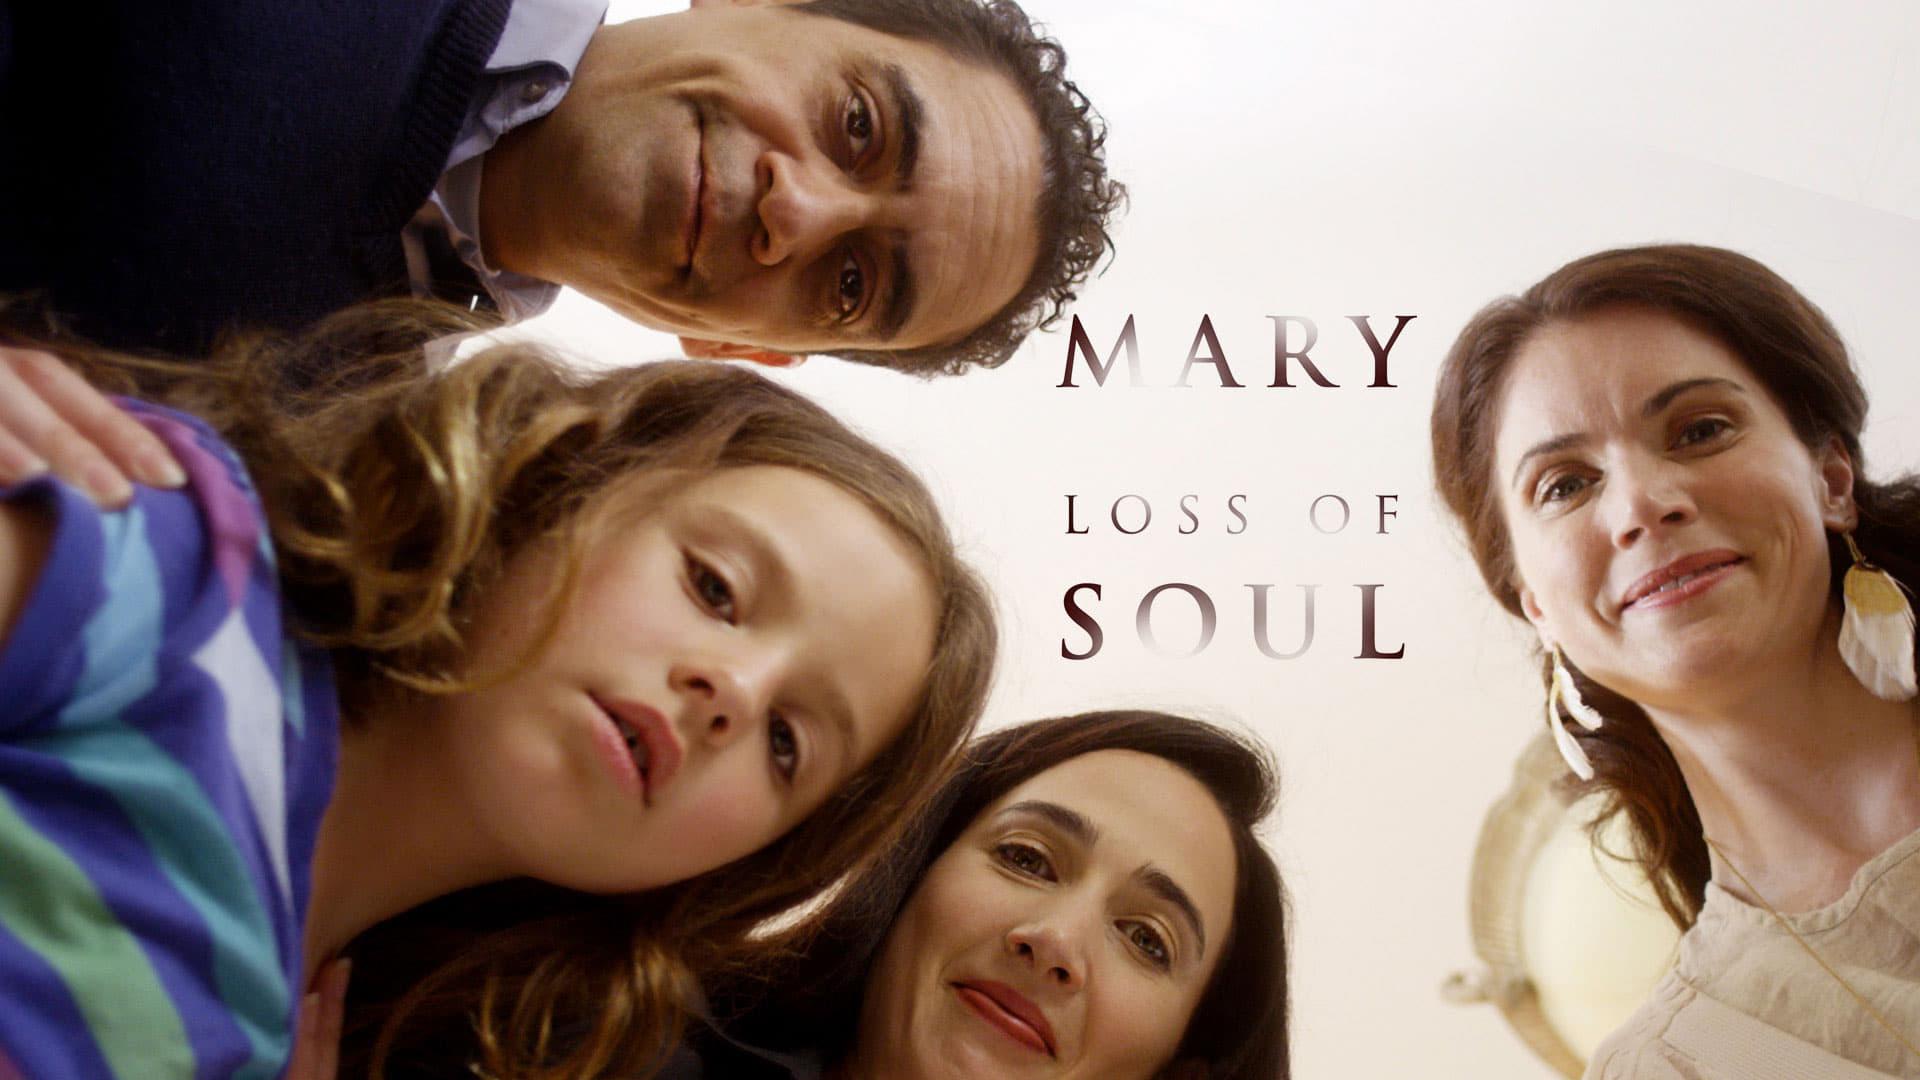 Mary Loss of Soul backdrop